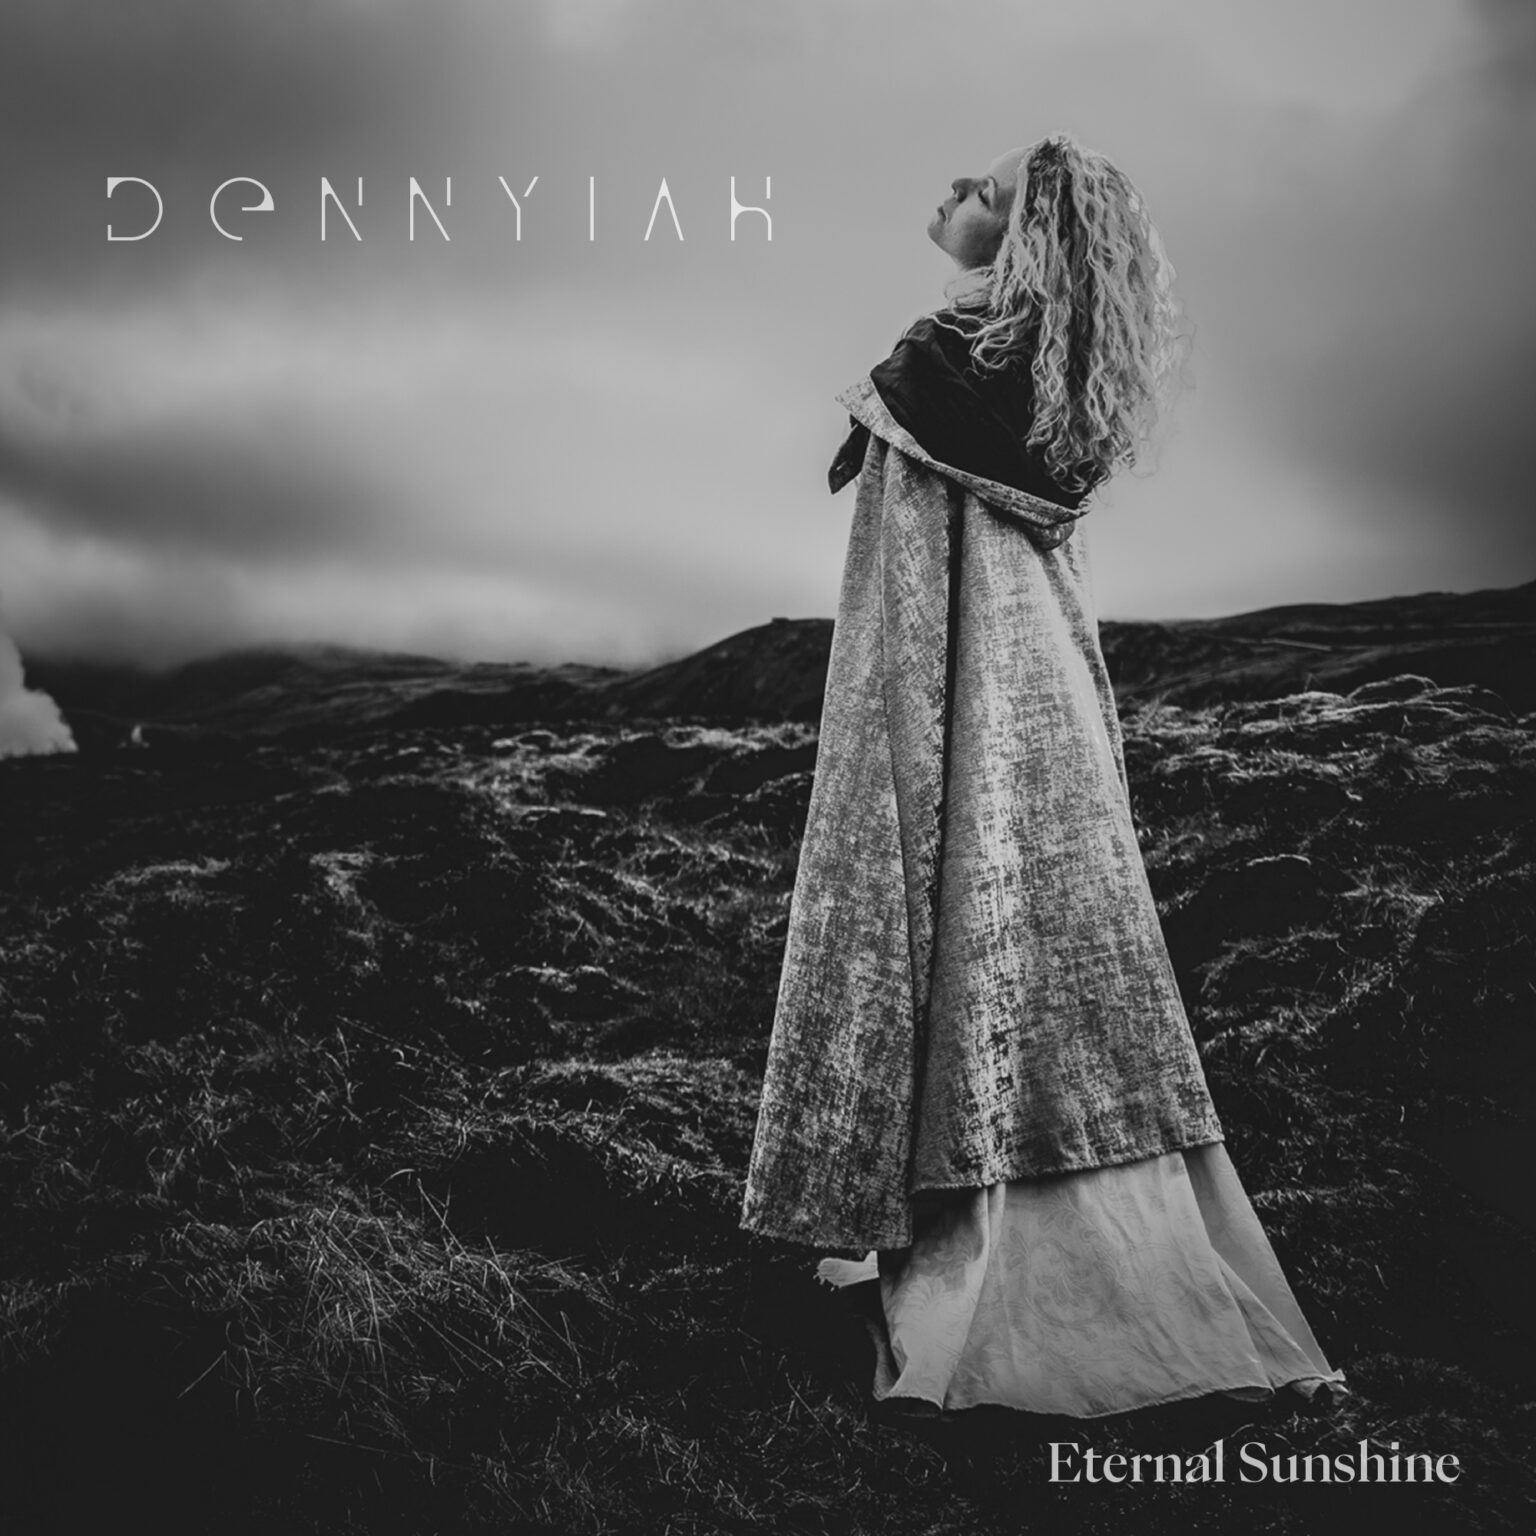 Dennyiah-EP cover by Siri Brændshøi